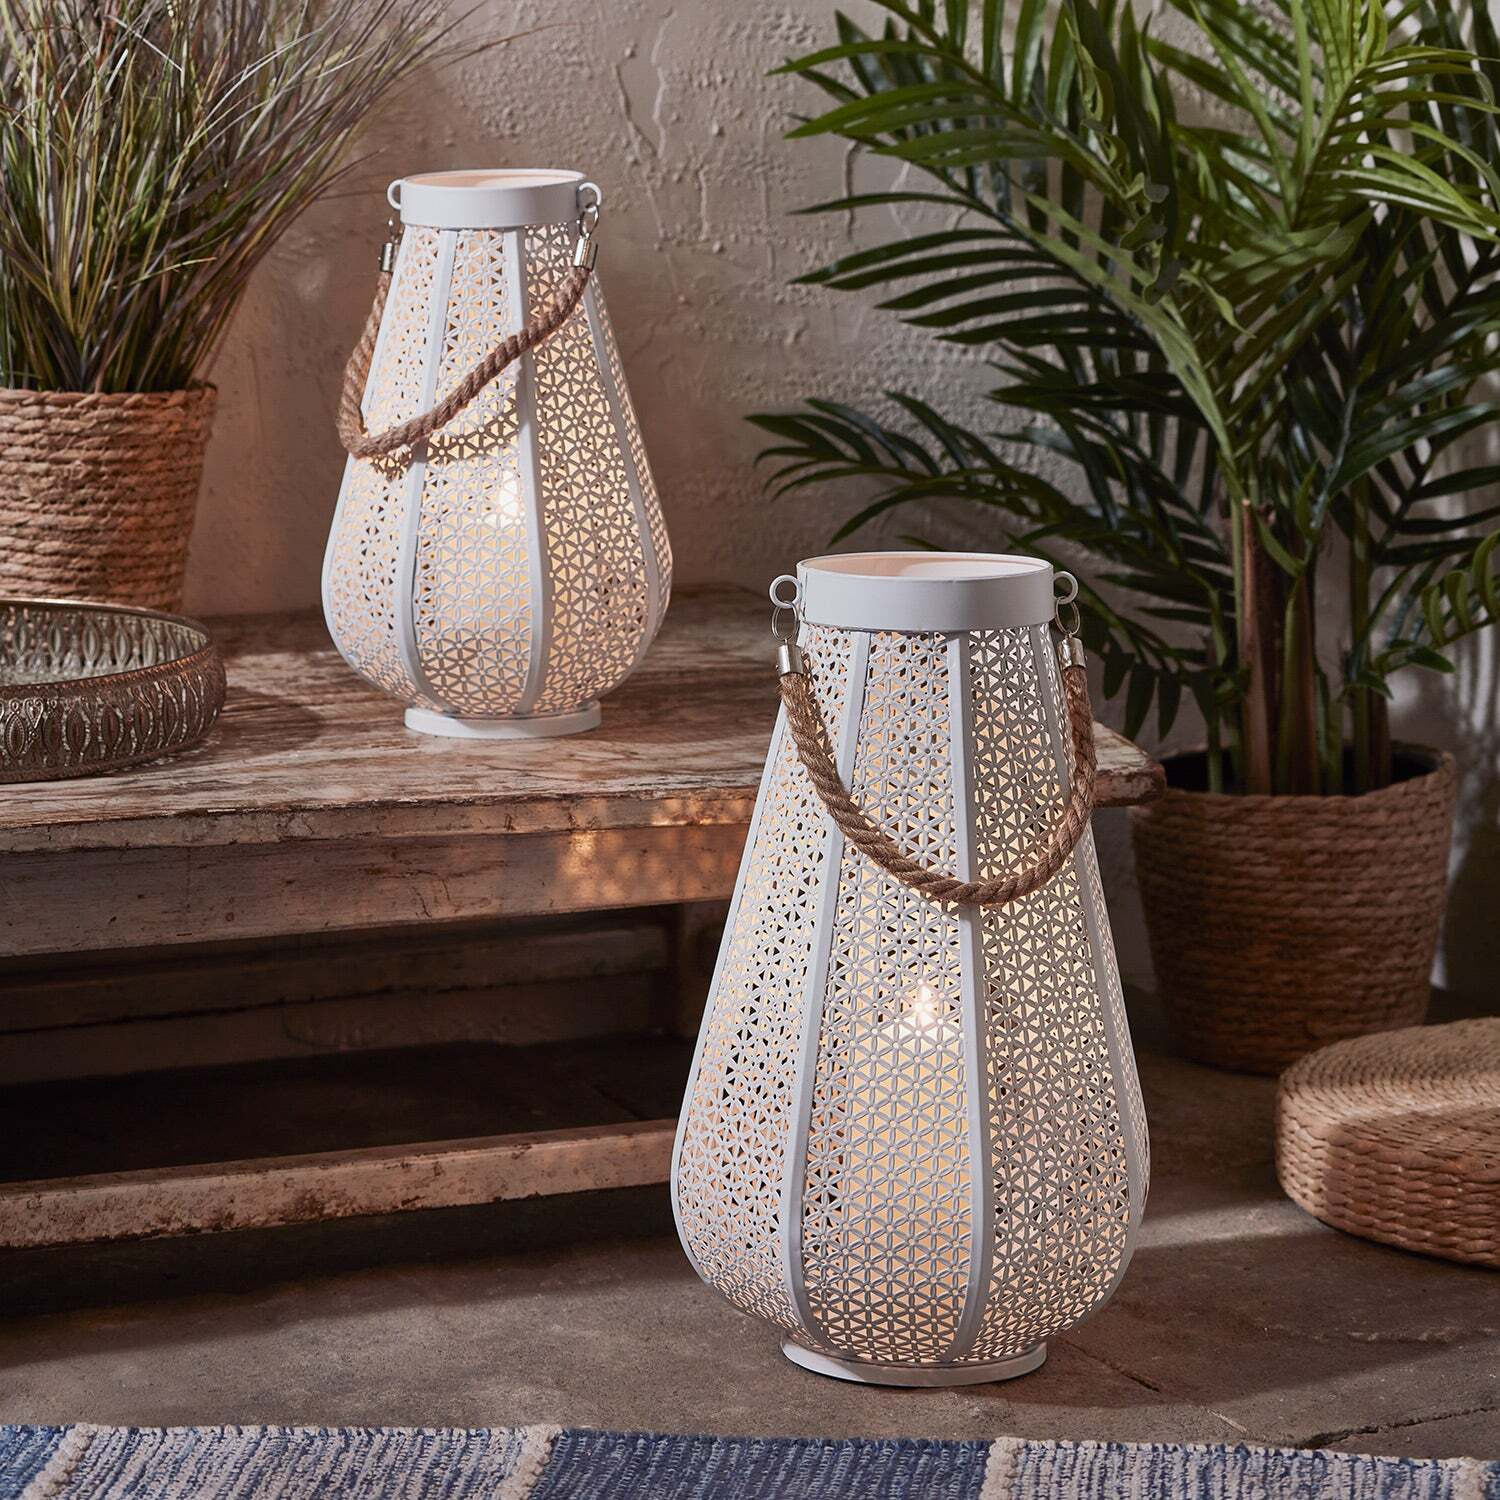 Pollensa White Garden Lantern Duo with TruGlow® Candles - image 1